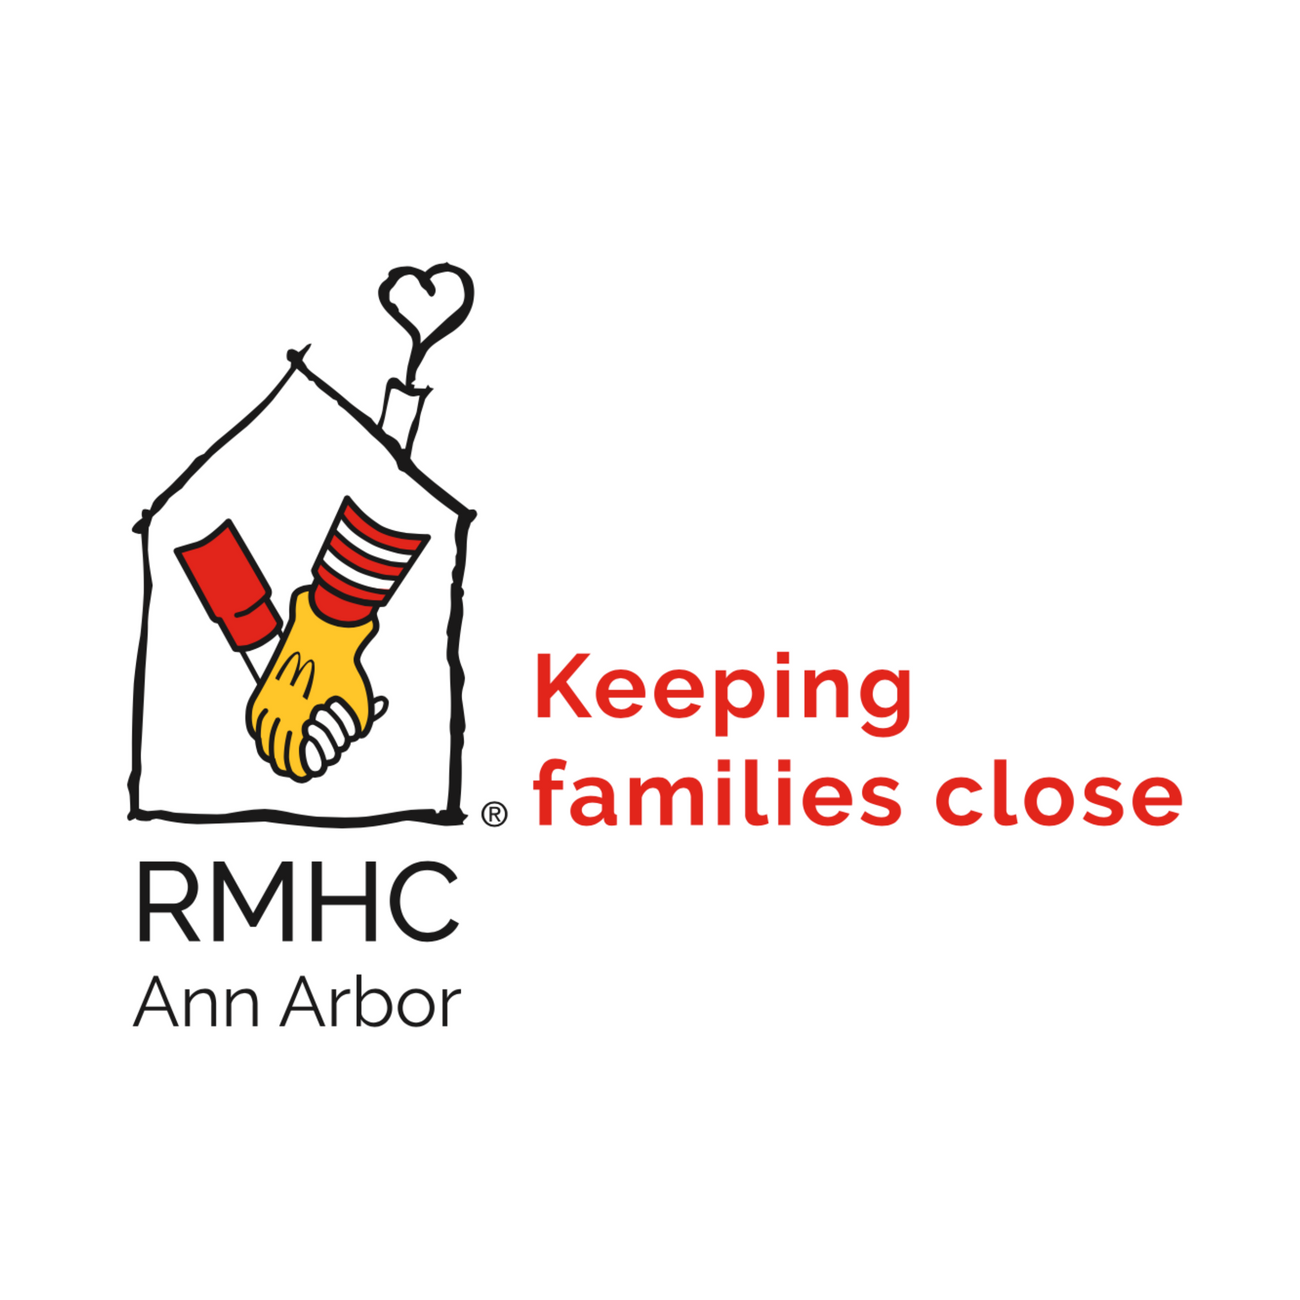 Ronald McDonald House Charities of Ann Arbor logo